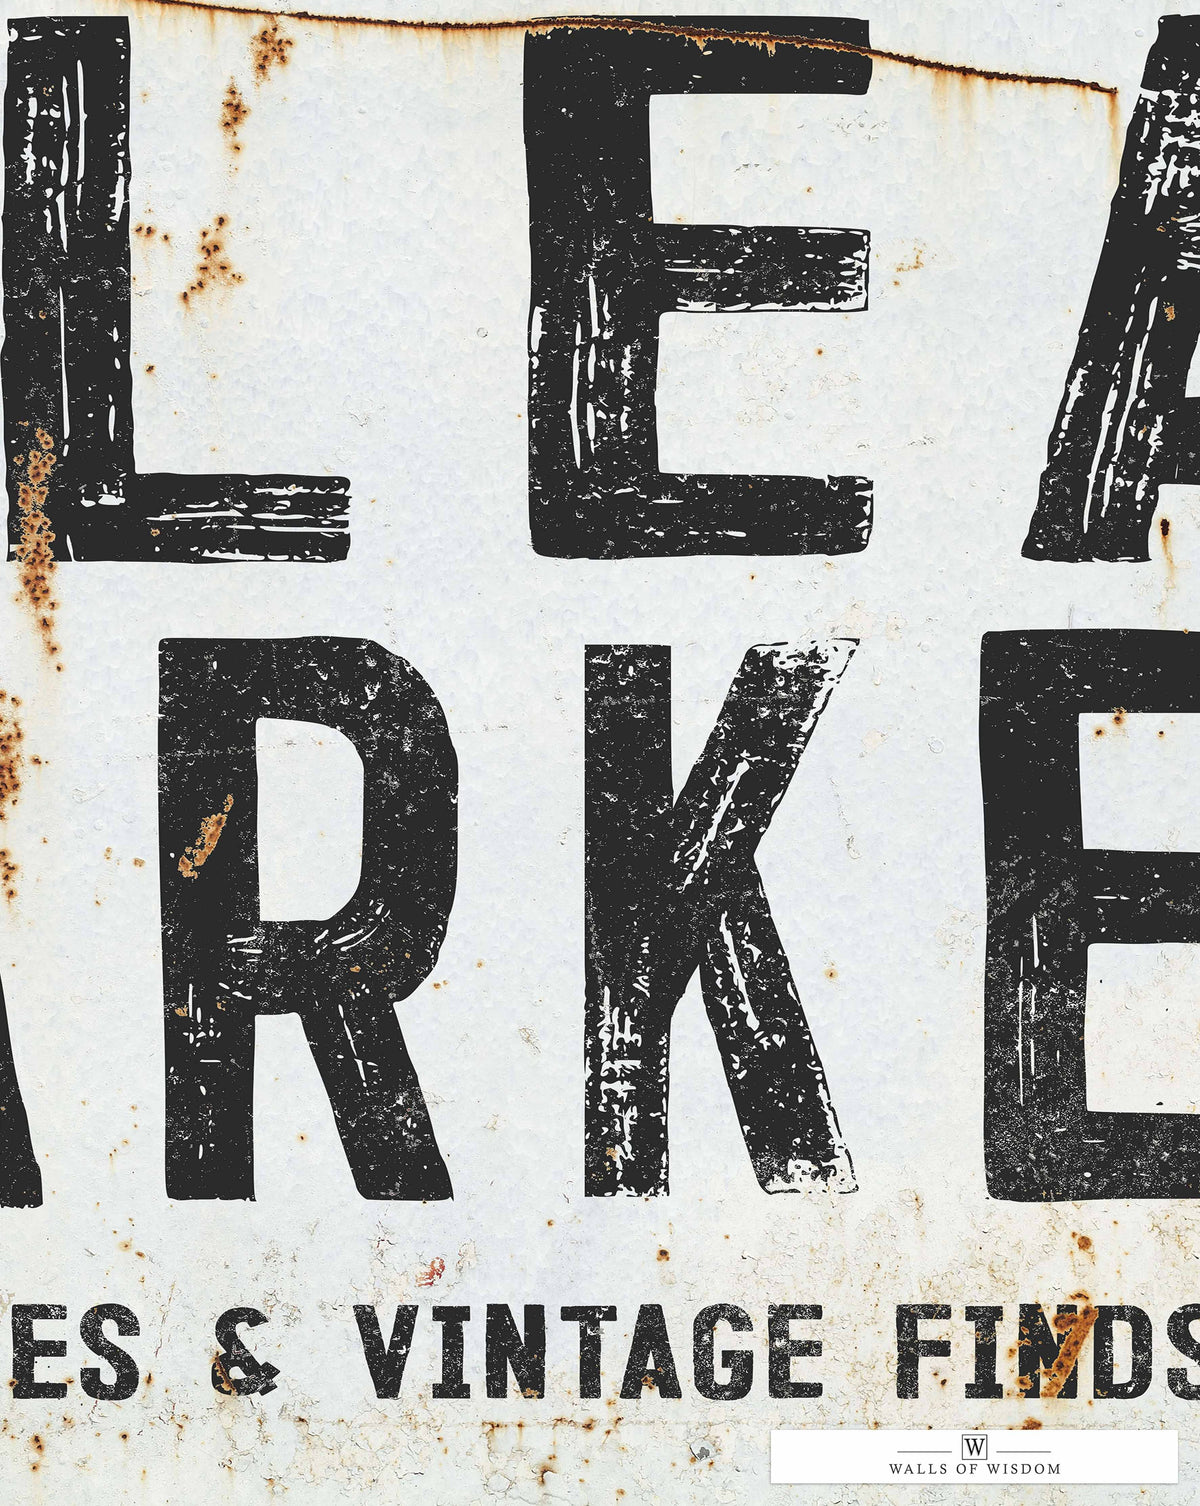 Antique Flea Market Canvas Sign - Vintage Finds, Distressed Trades Days Decor